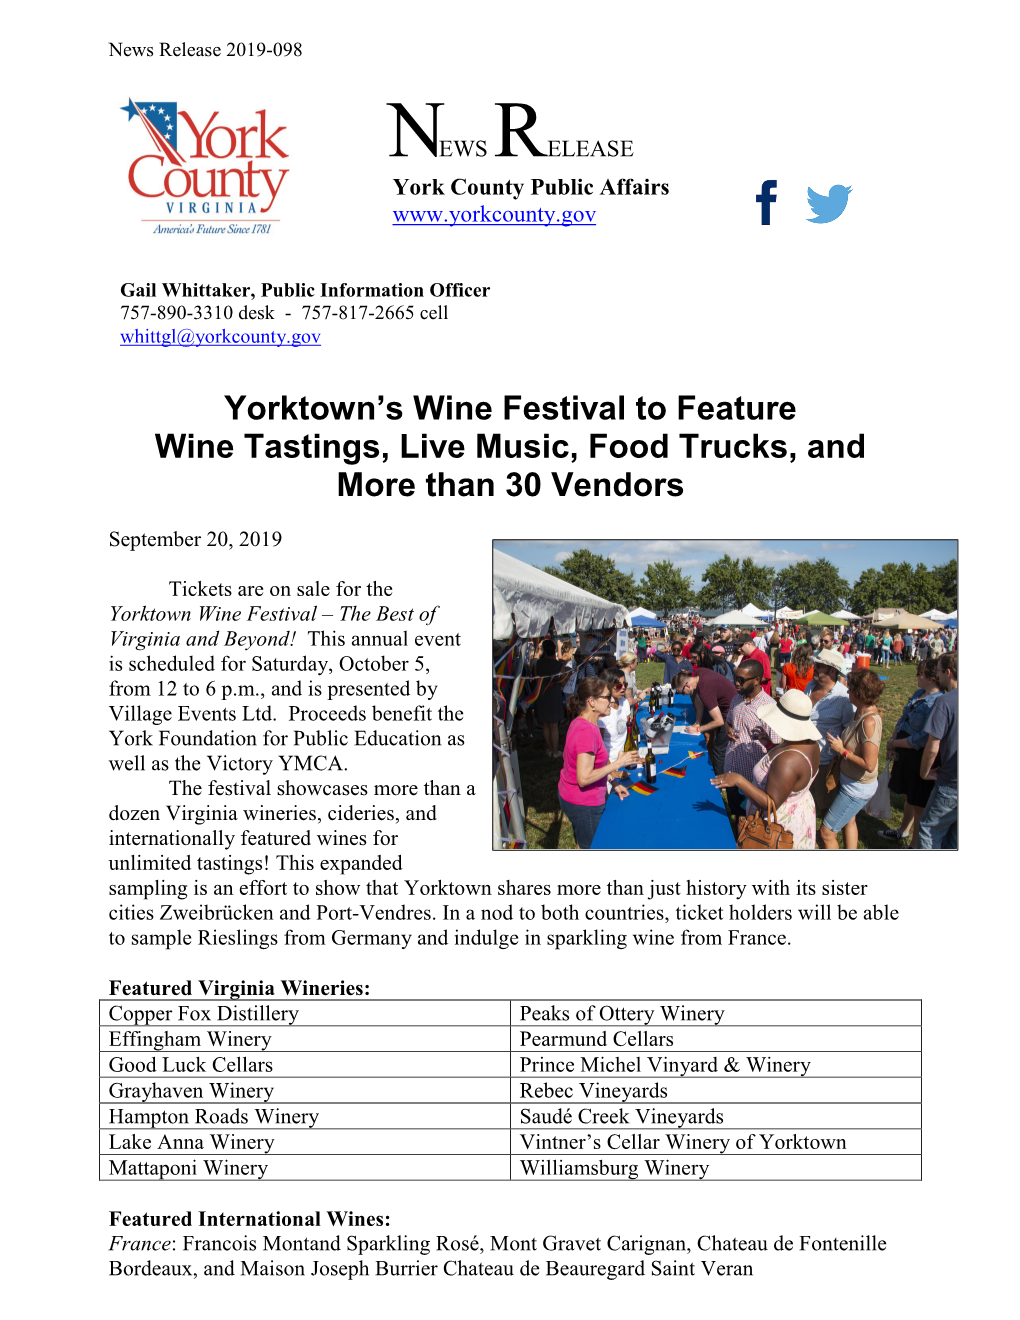 Yorktown's Wine Festival to Feature Wine Tastings, Live Music, Food